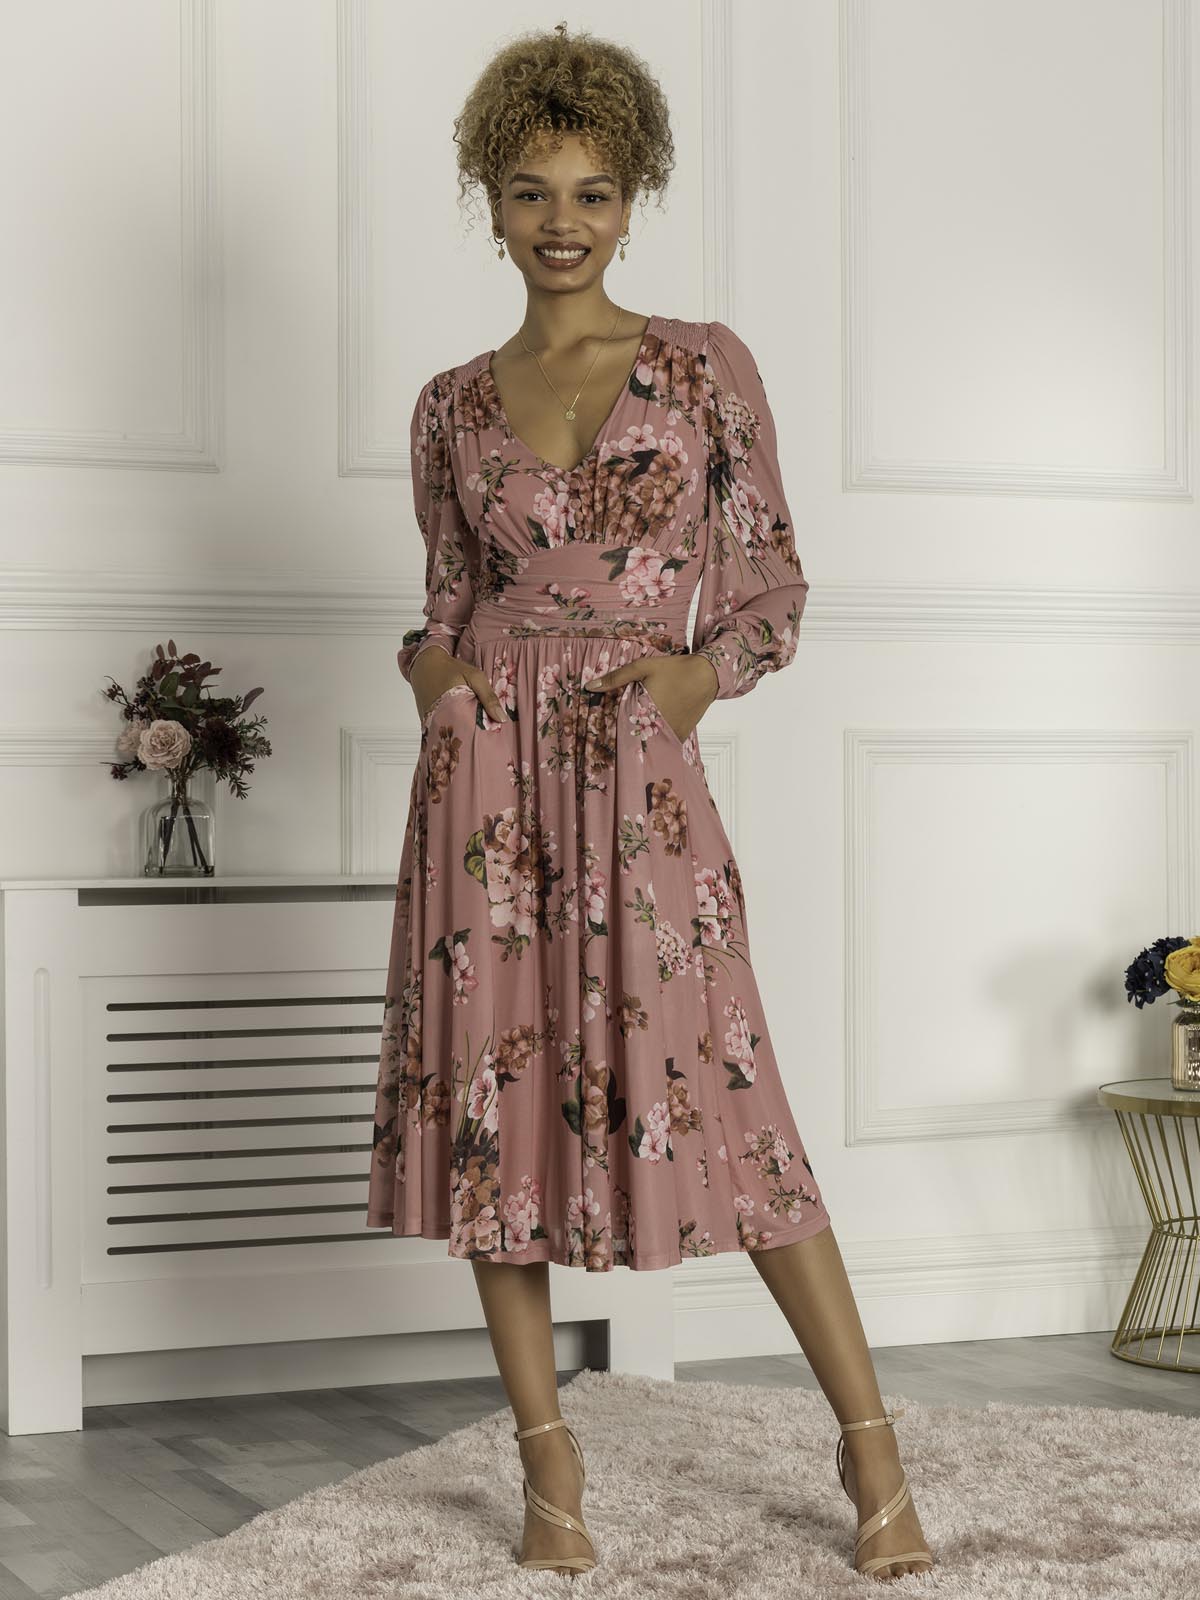 Phoebe Long Sleeve Mesh Dress, Pink